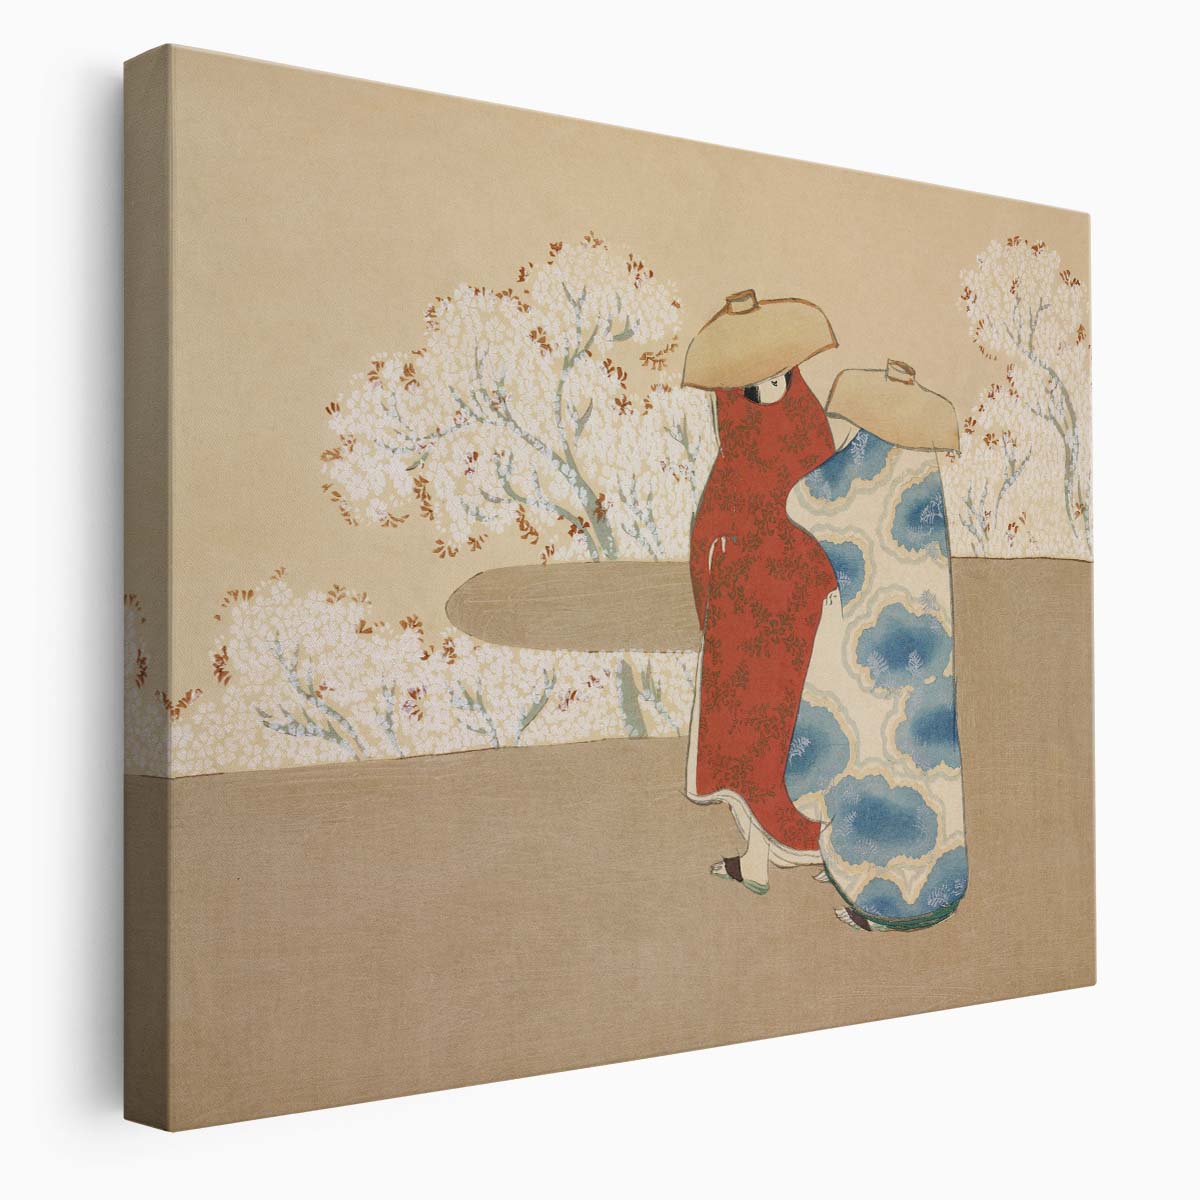 Kamisaka Sekka's Hanami Season Japanese Woodblock Wall Art by Luxuriance Designs. Made in USA.